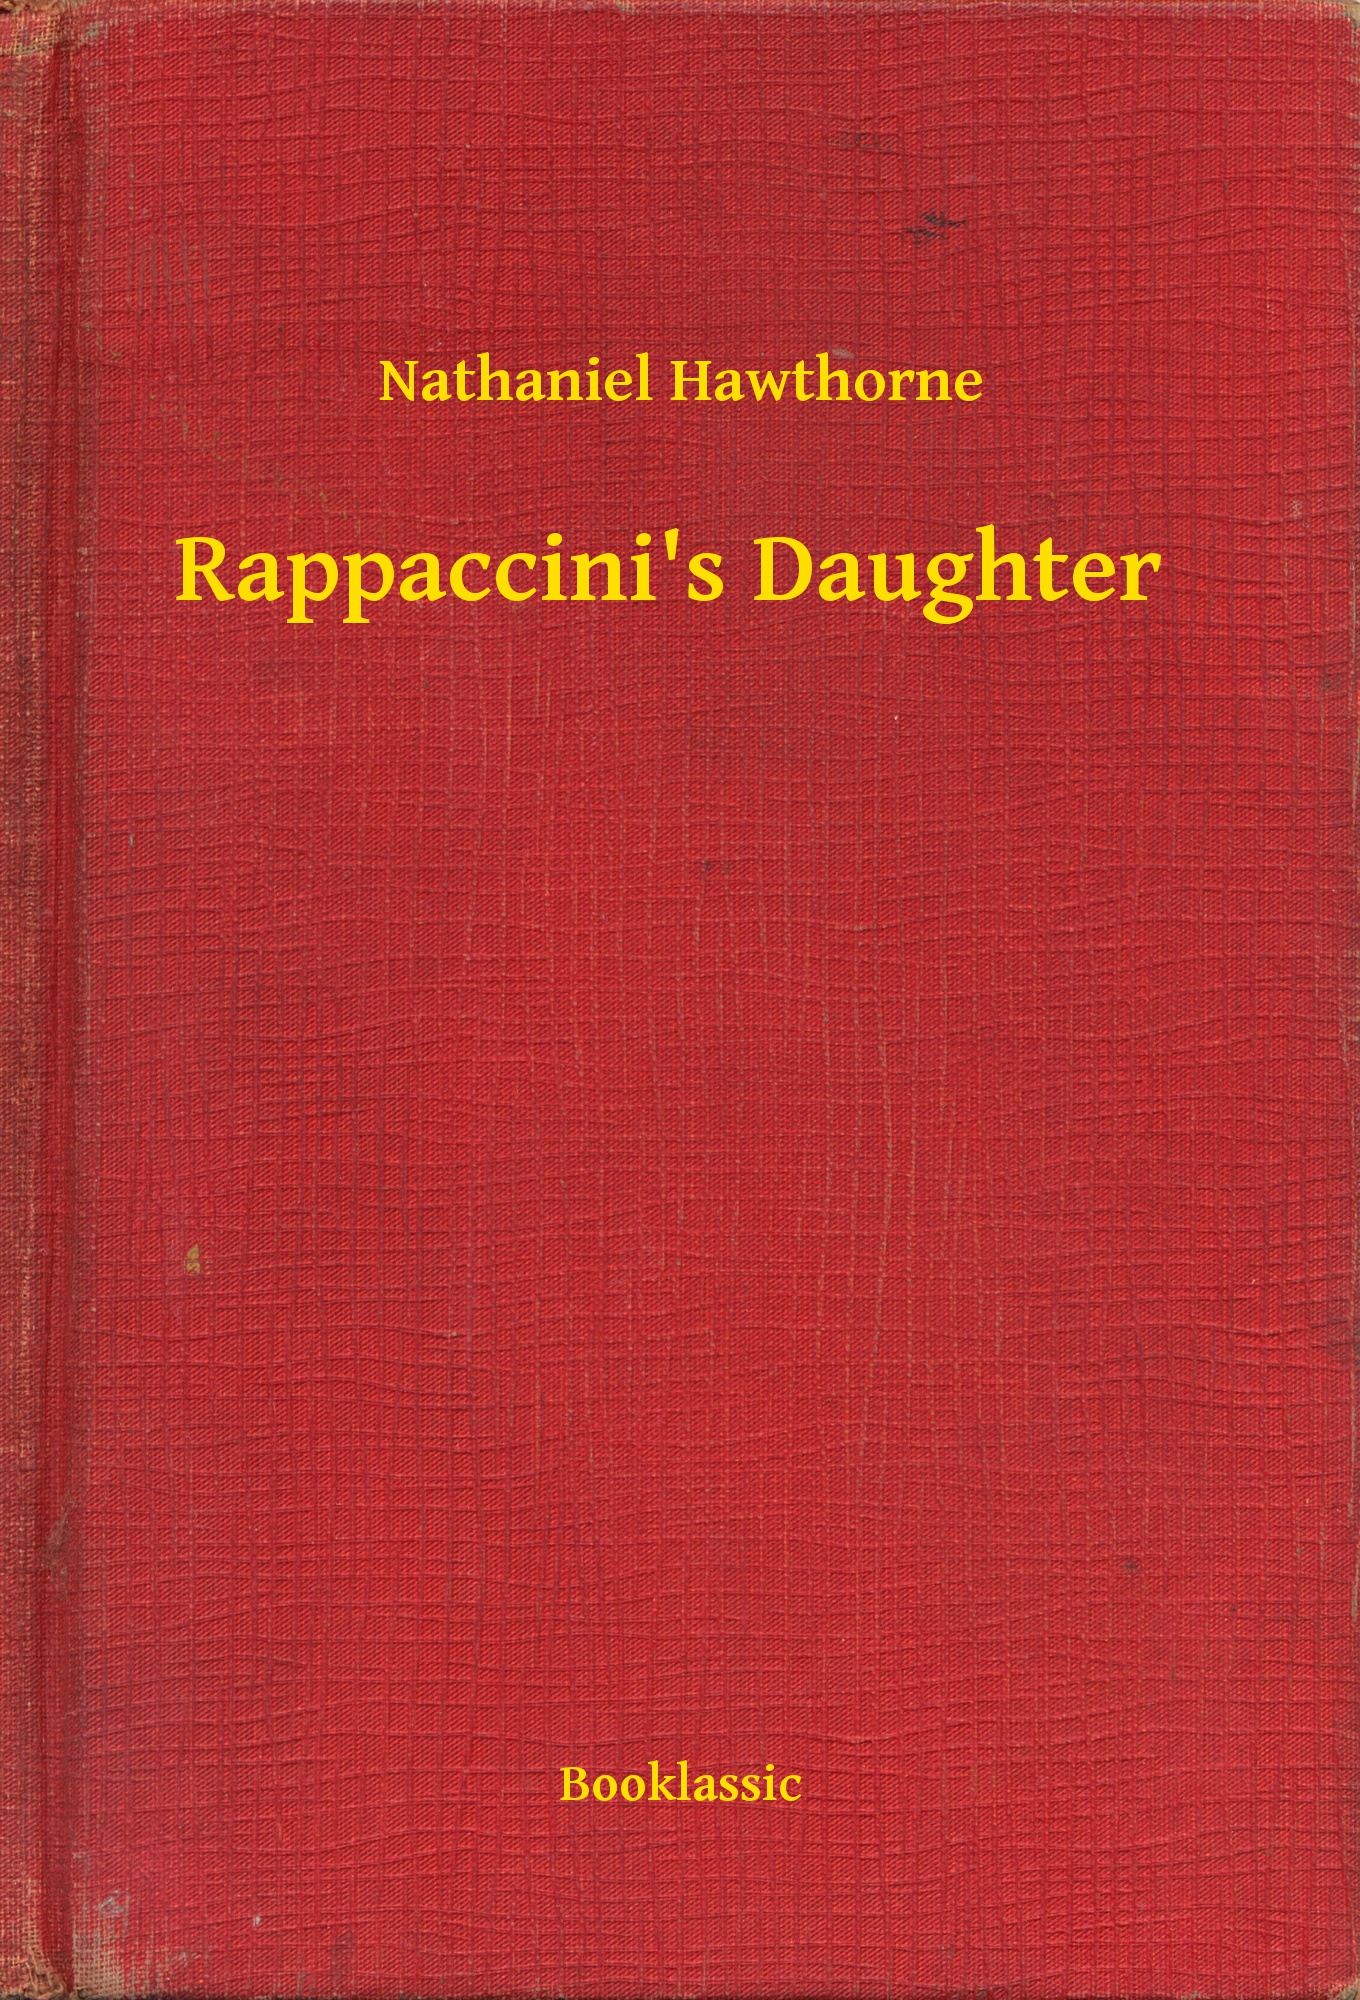 Rappaccini"s Daughter